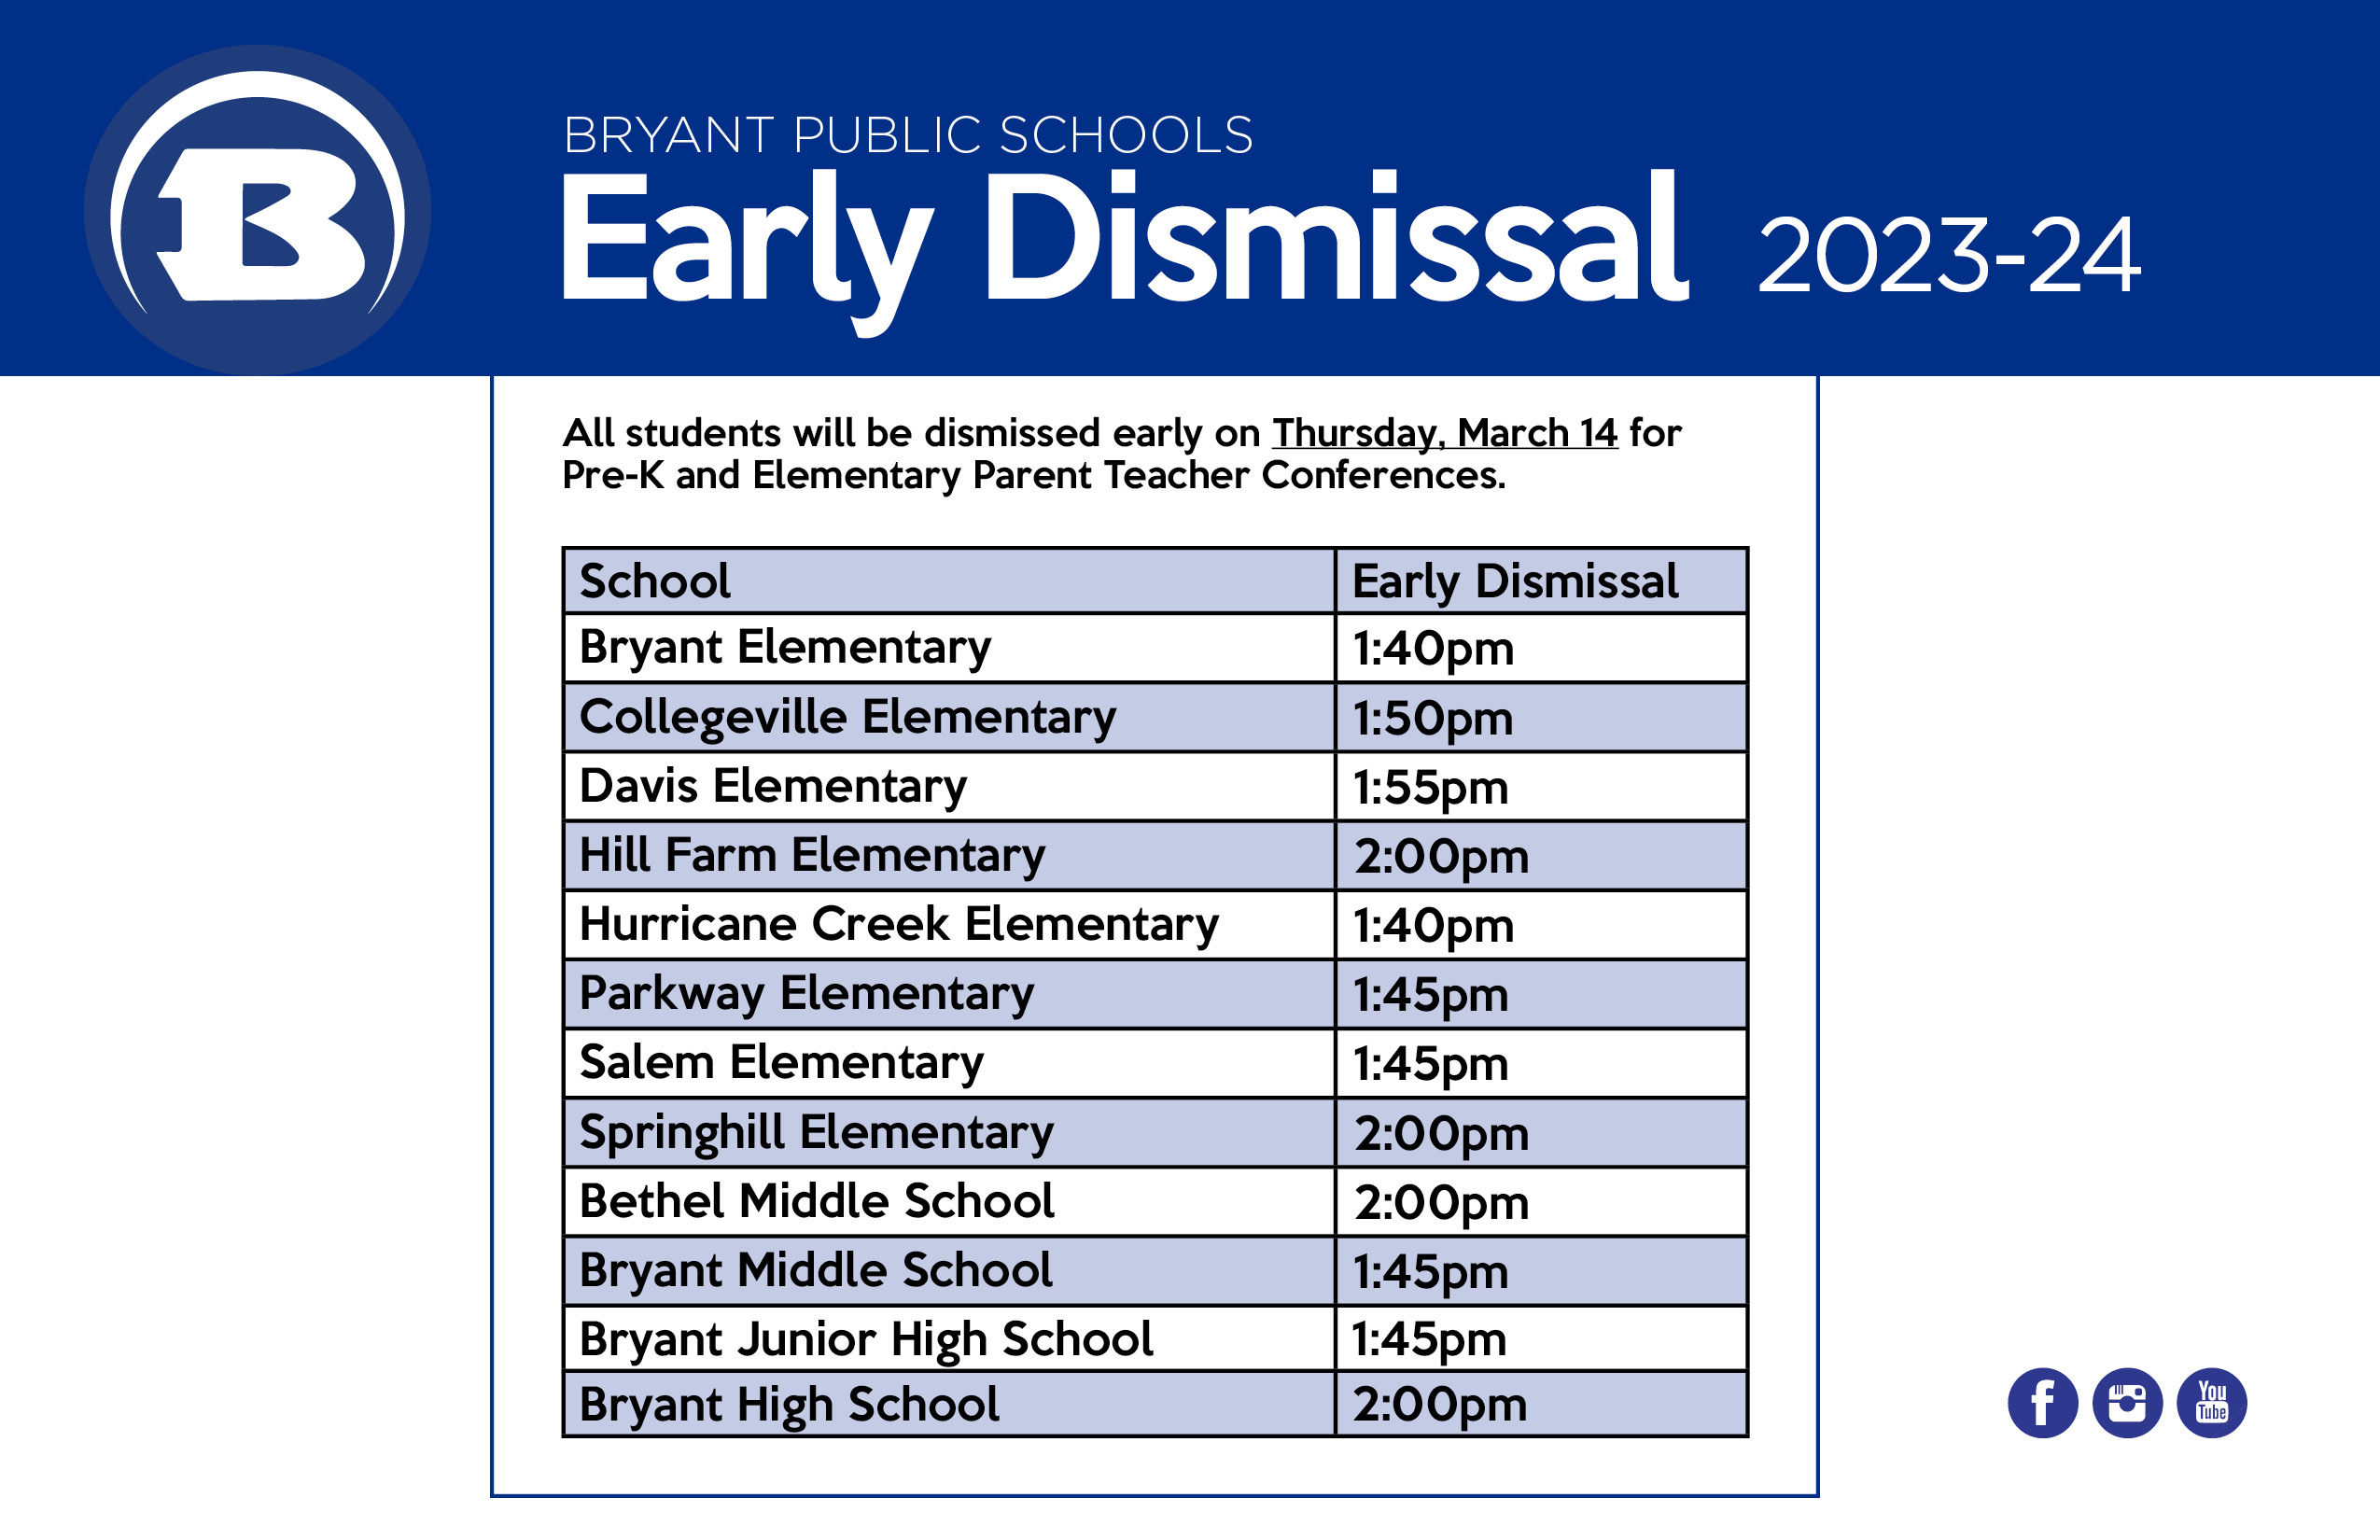 Early Dismissal February 15